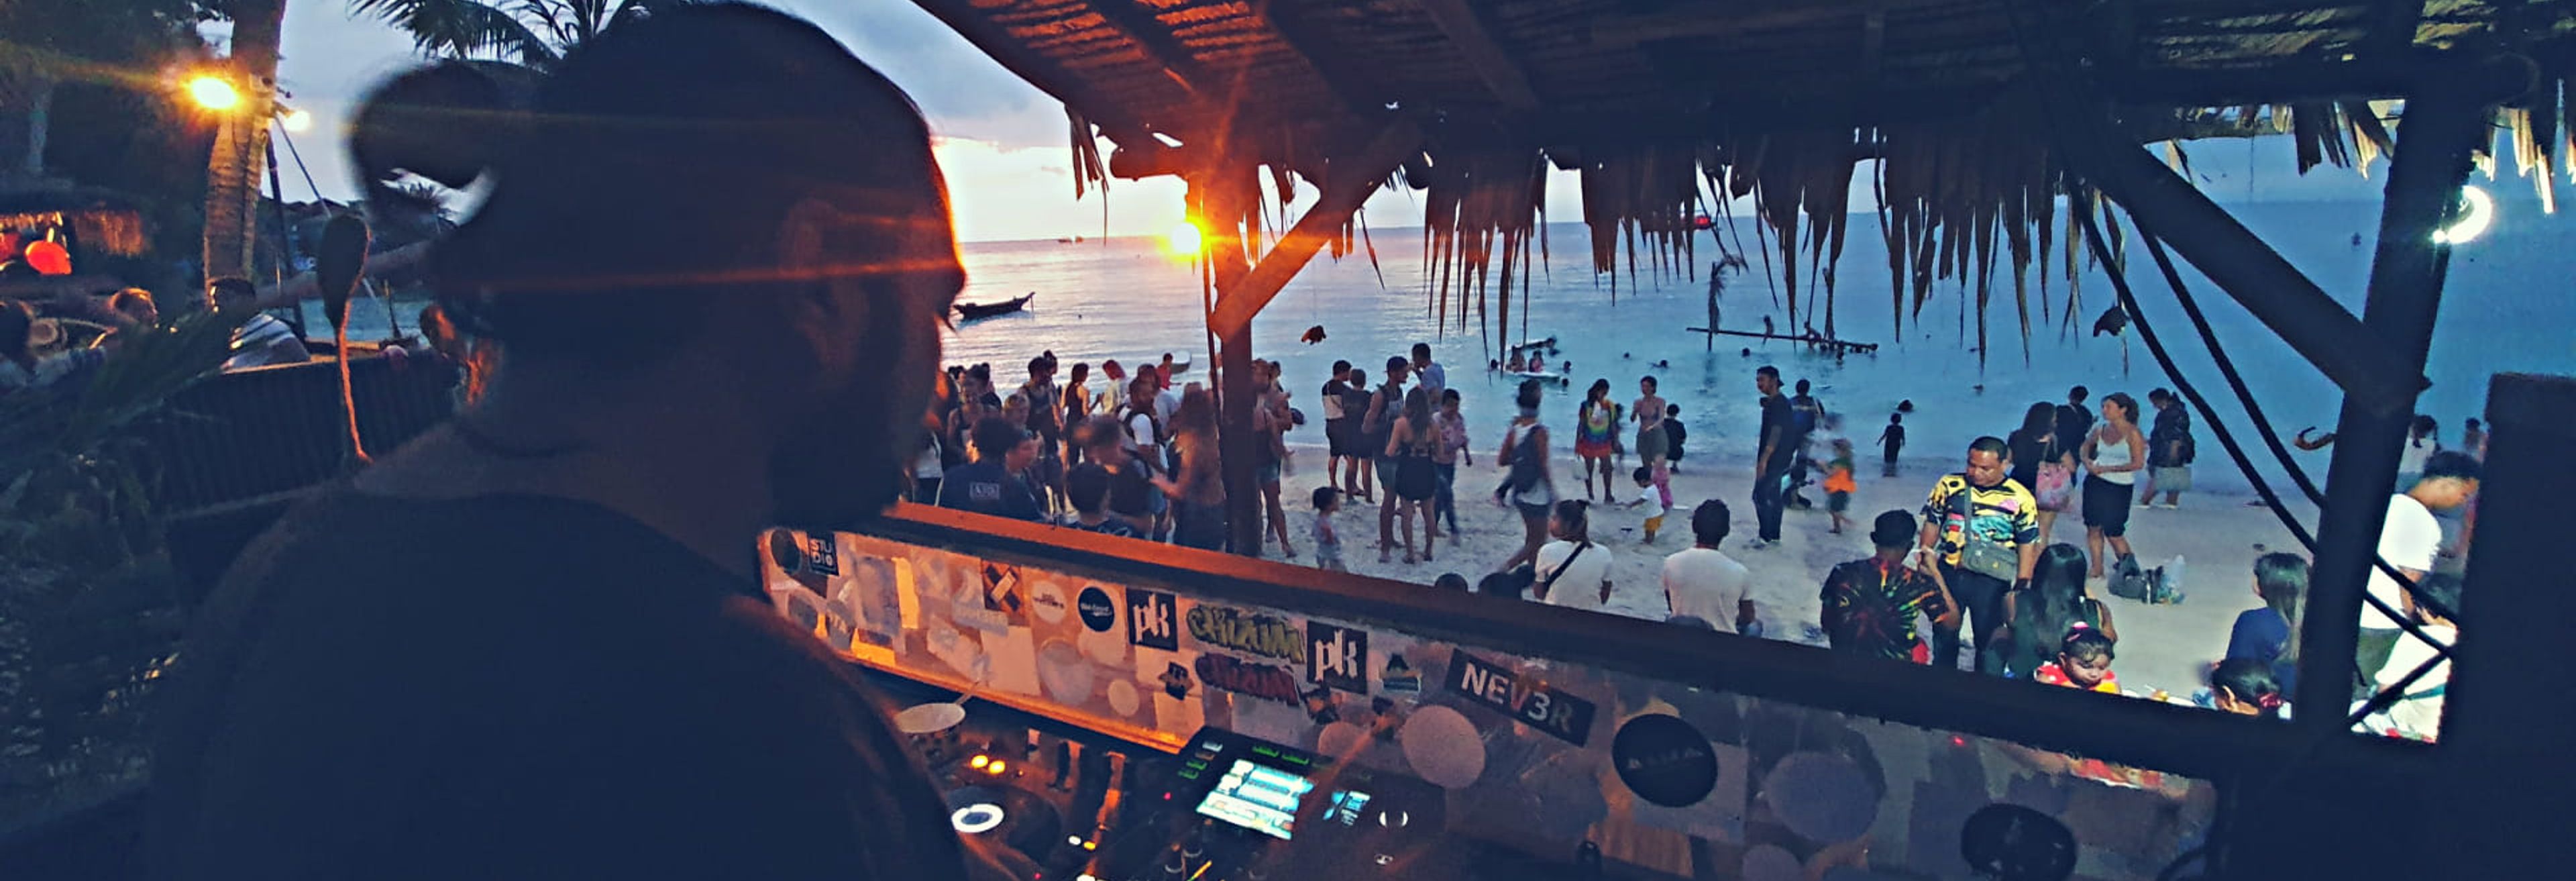 maya beach club thailand